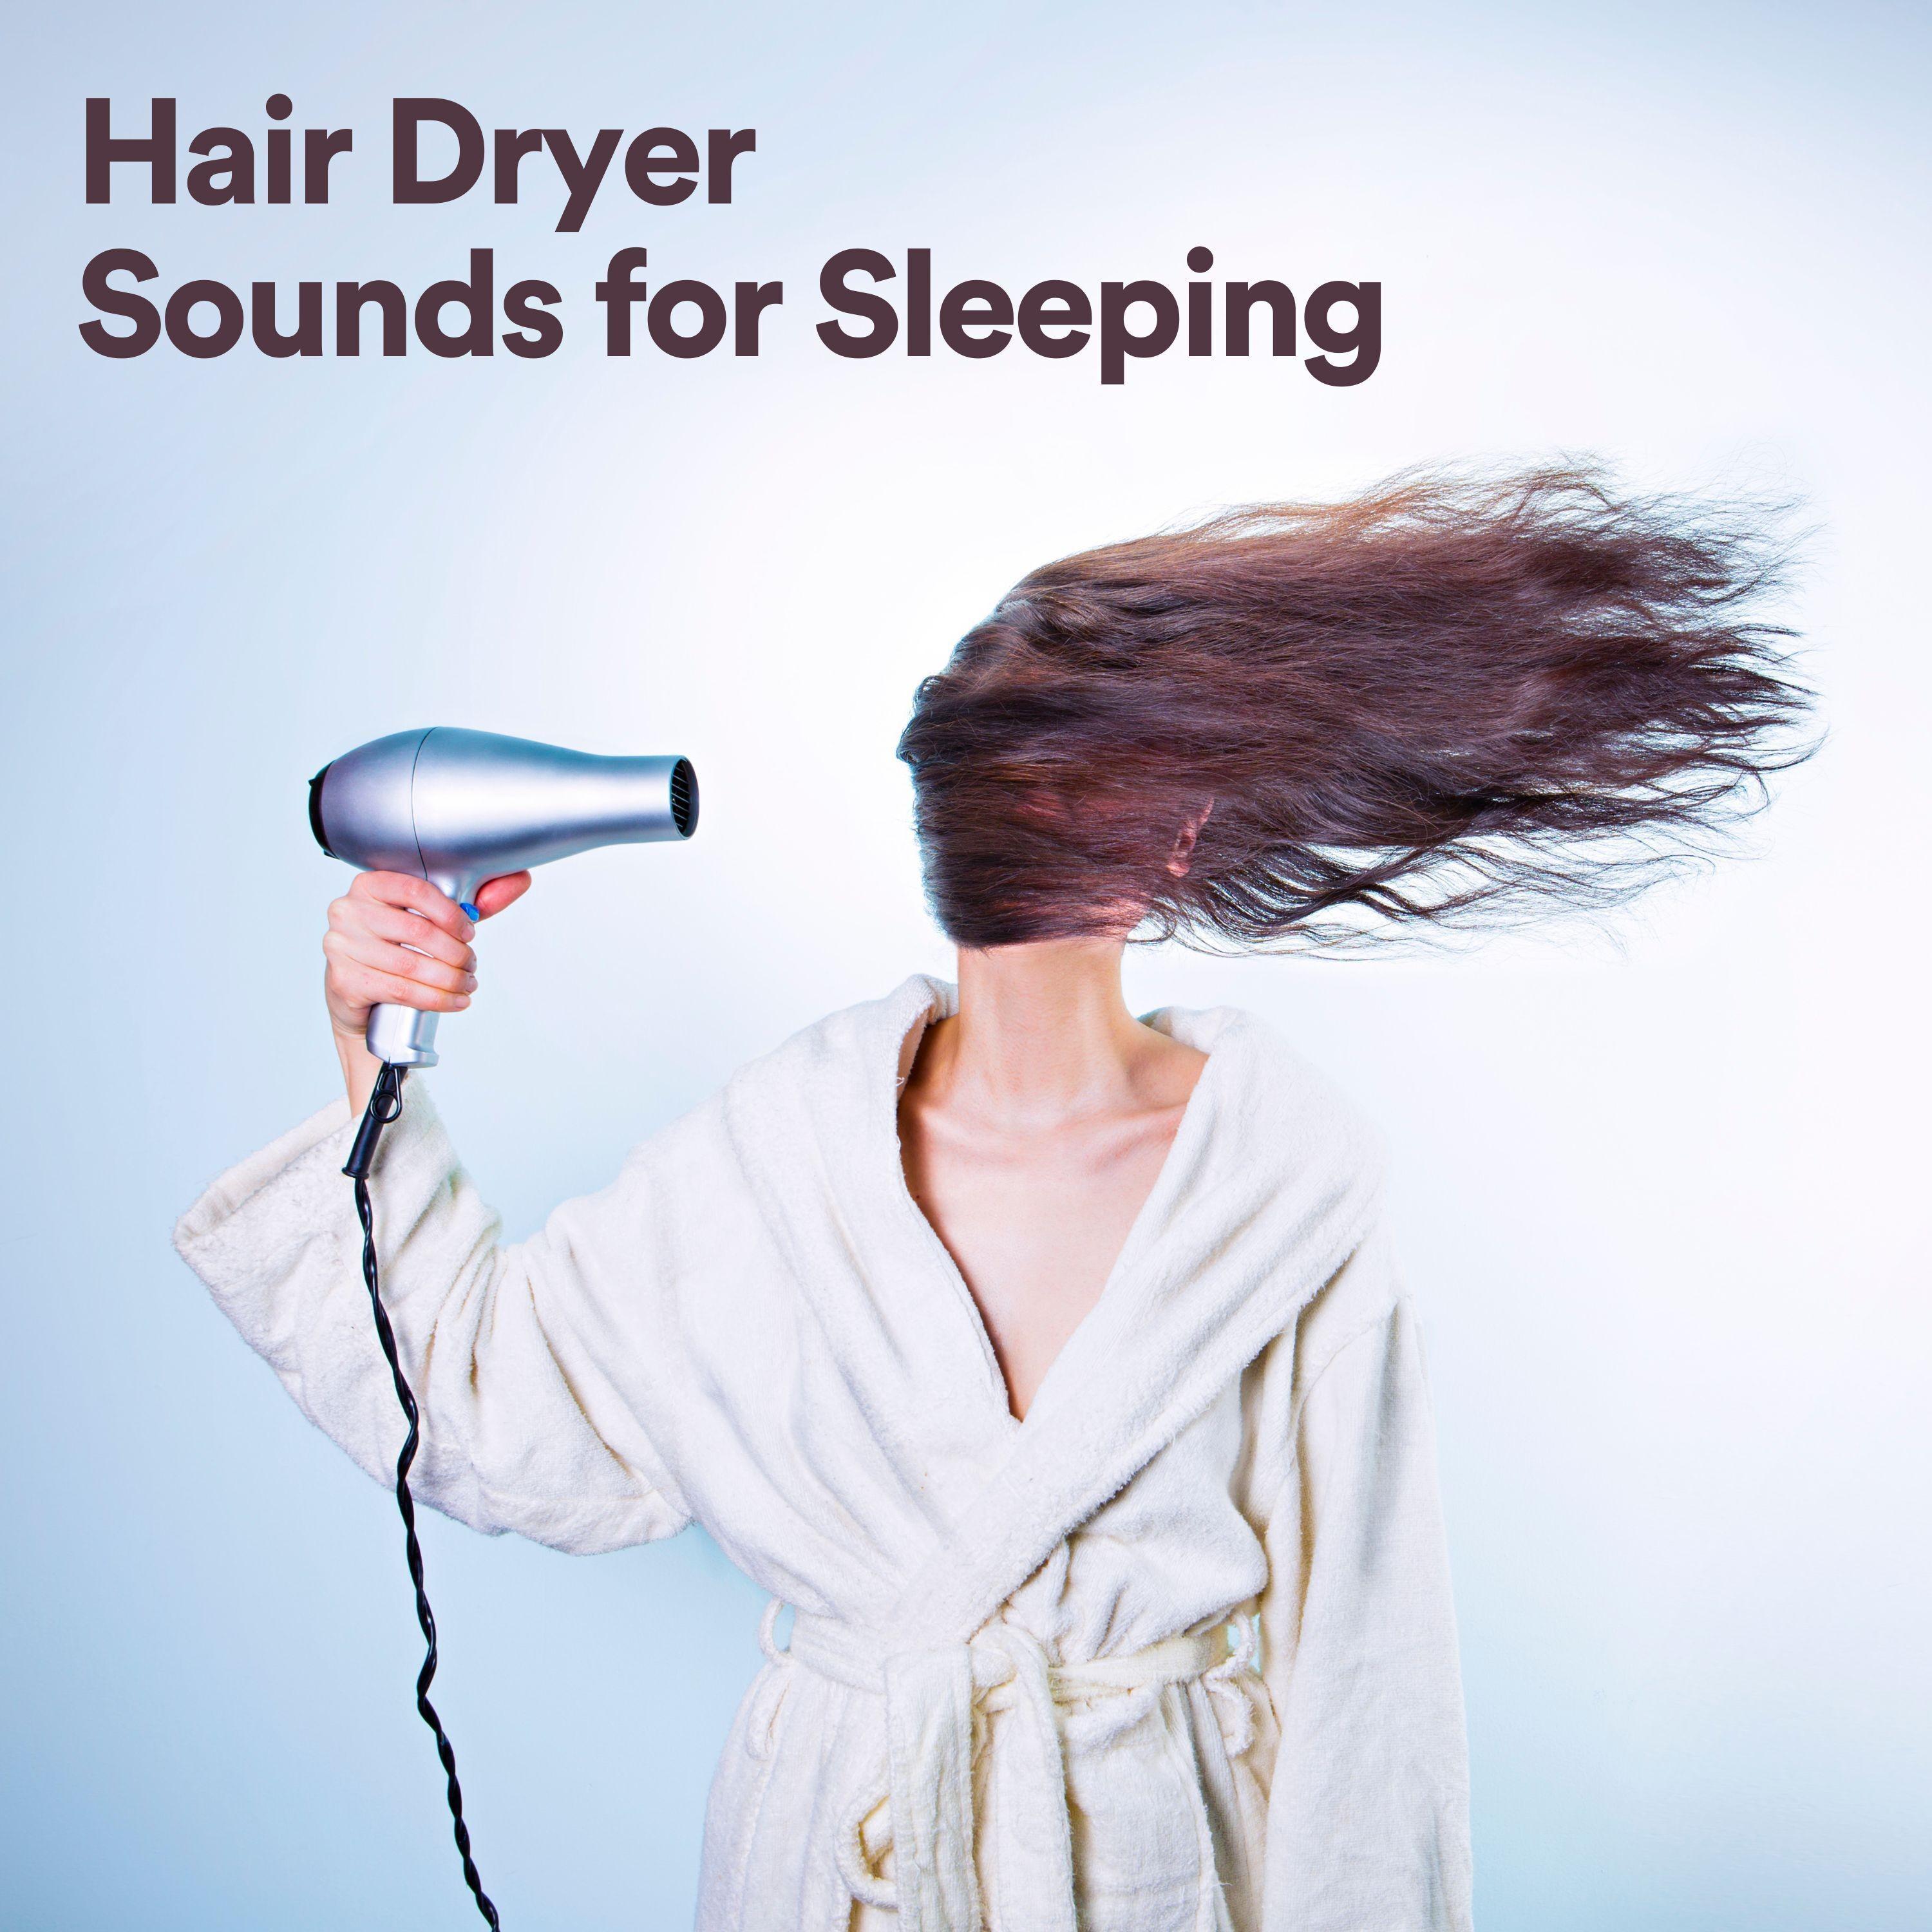 Deep Sleep Hair Dryers - Background Hair Dryer